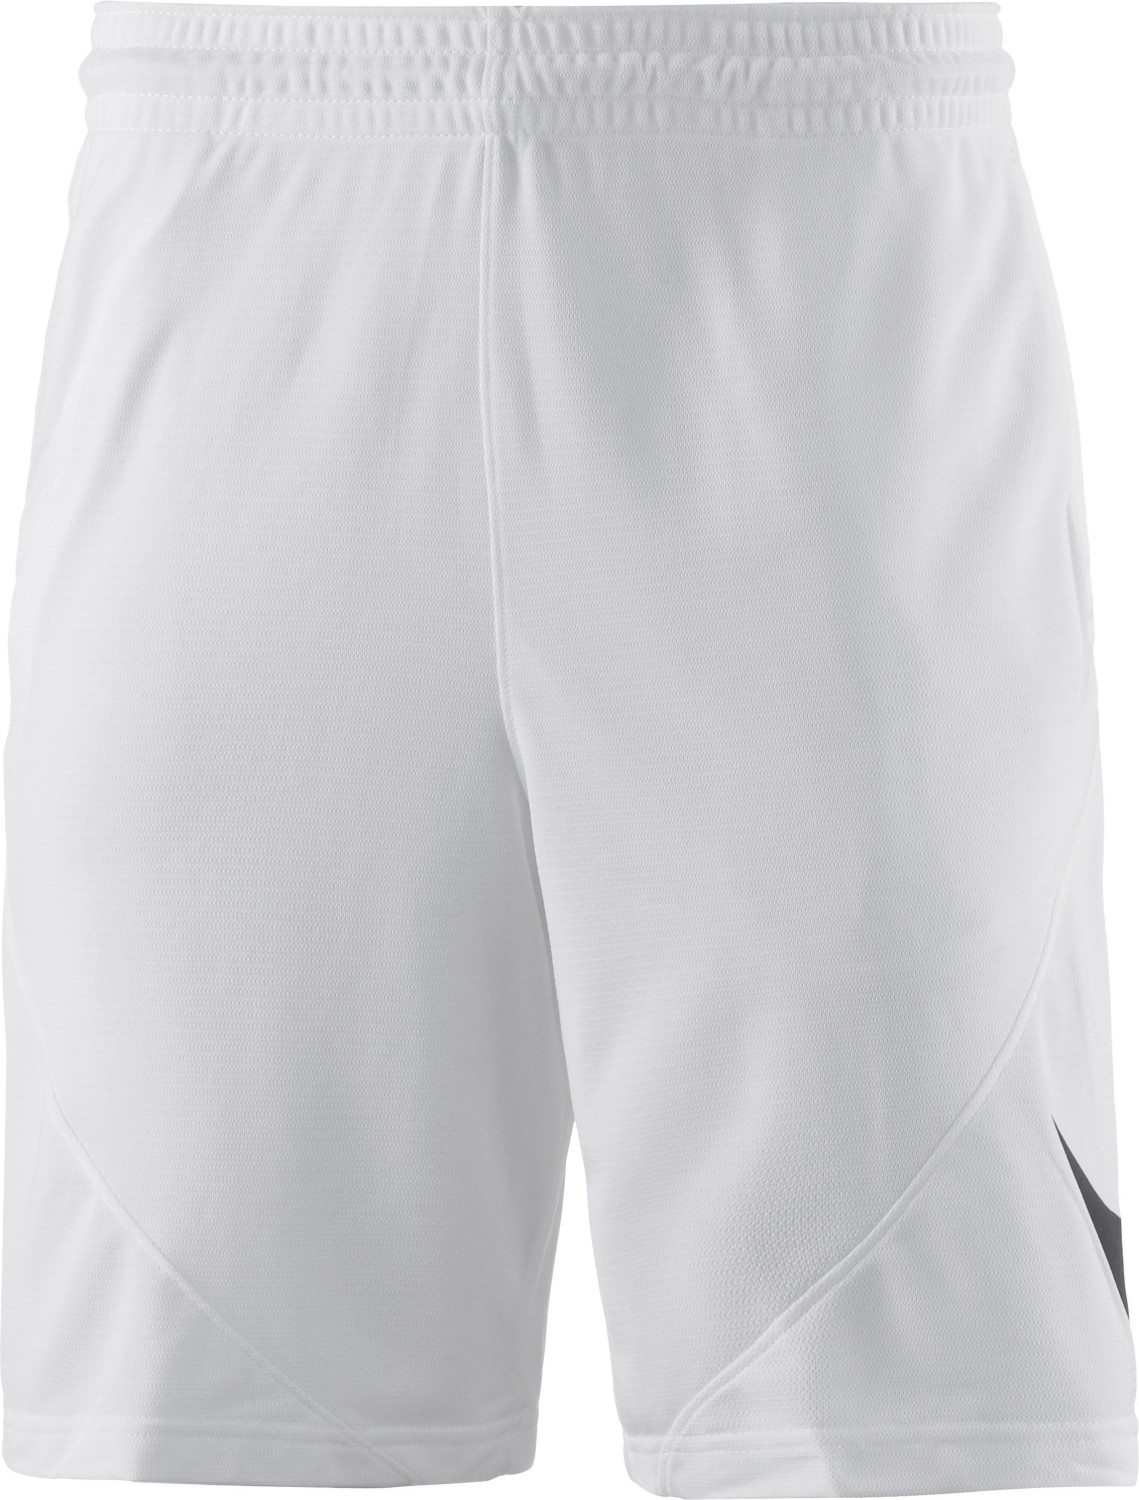 Nike Basketball Shorts (910704-100) white/black